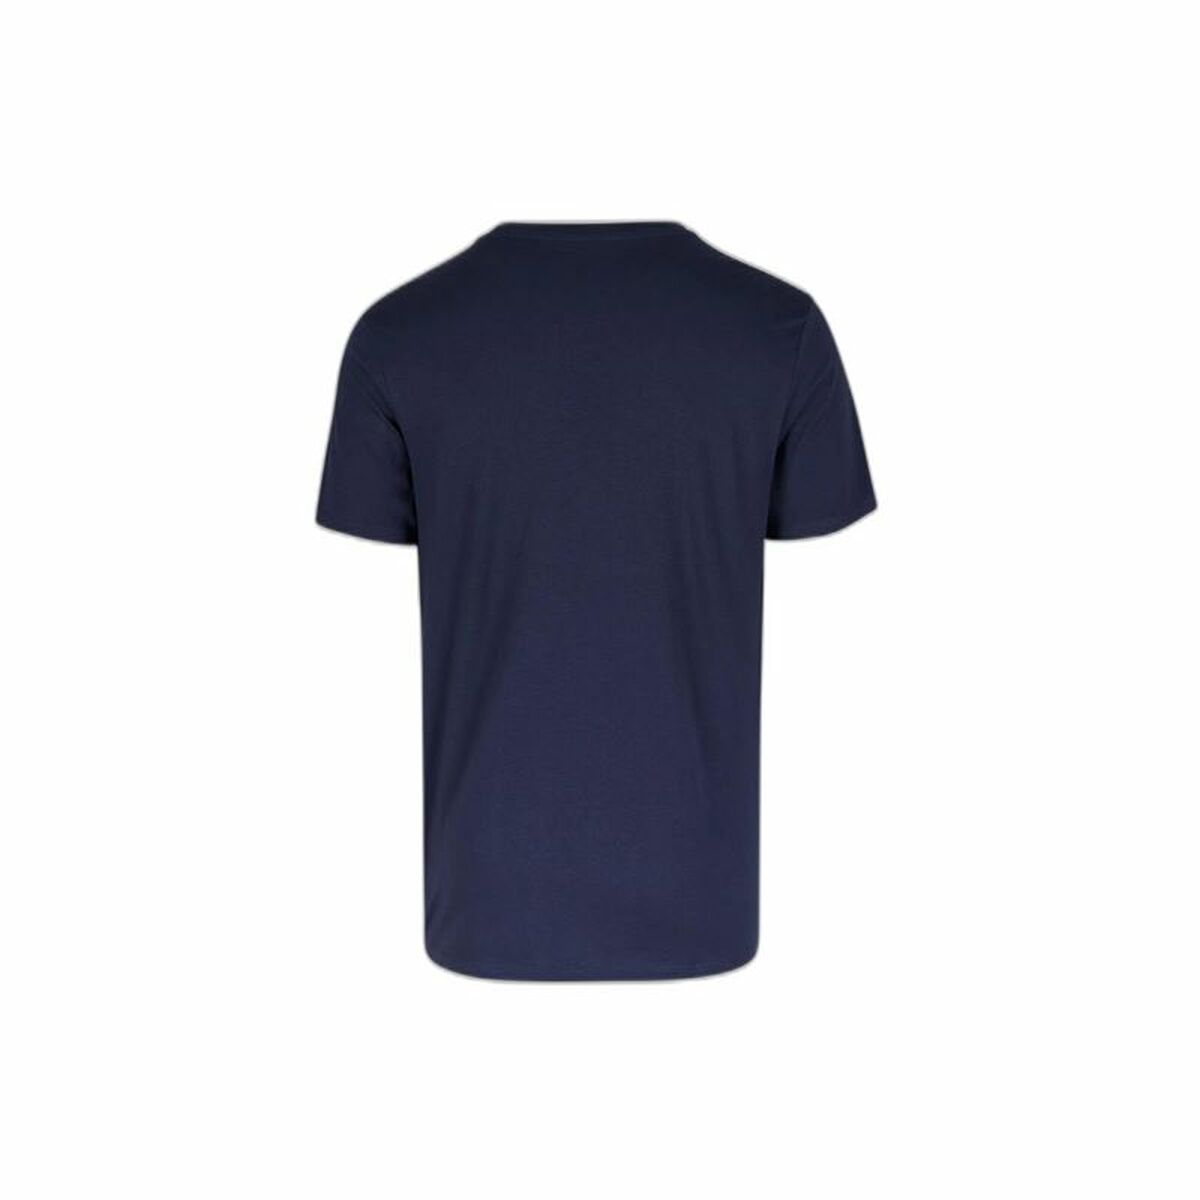 T-shirt à manches courtes homme O'Neill Blue marine